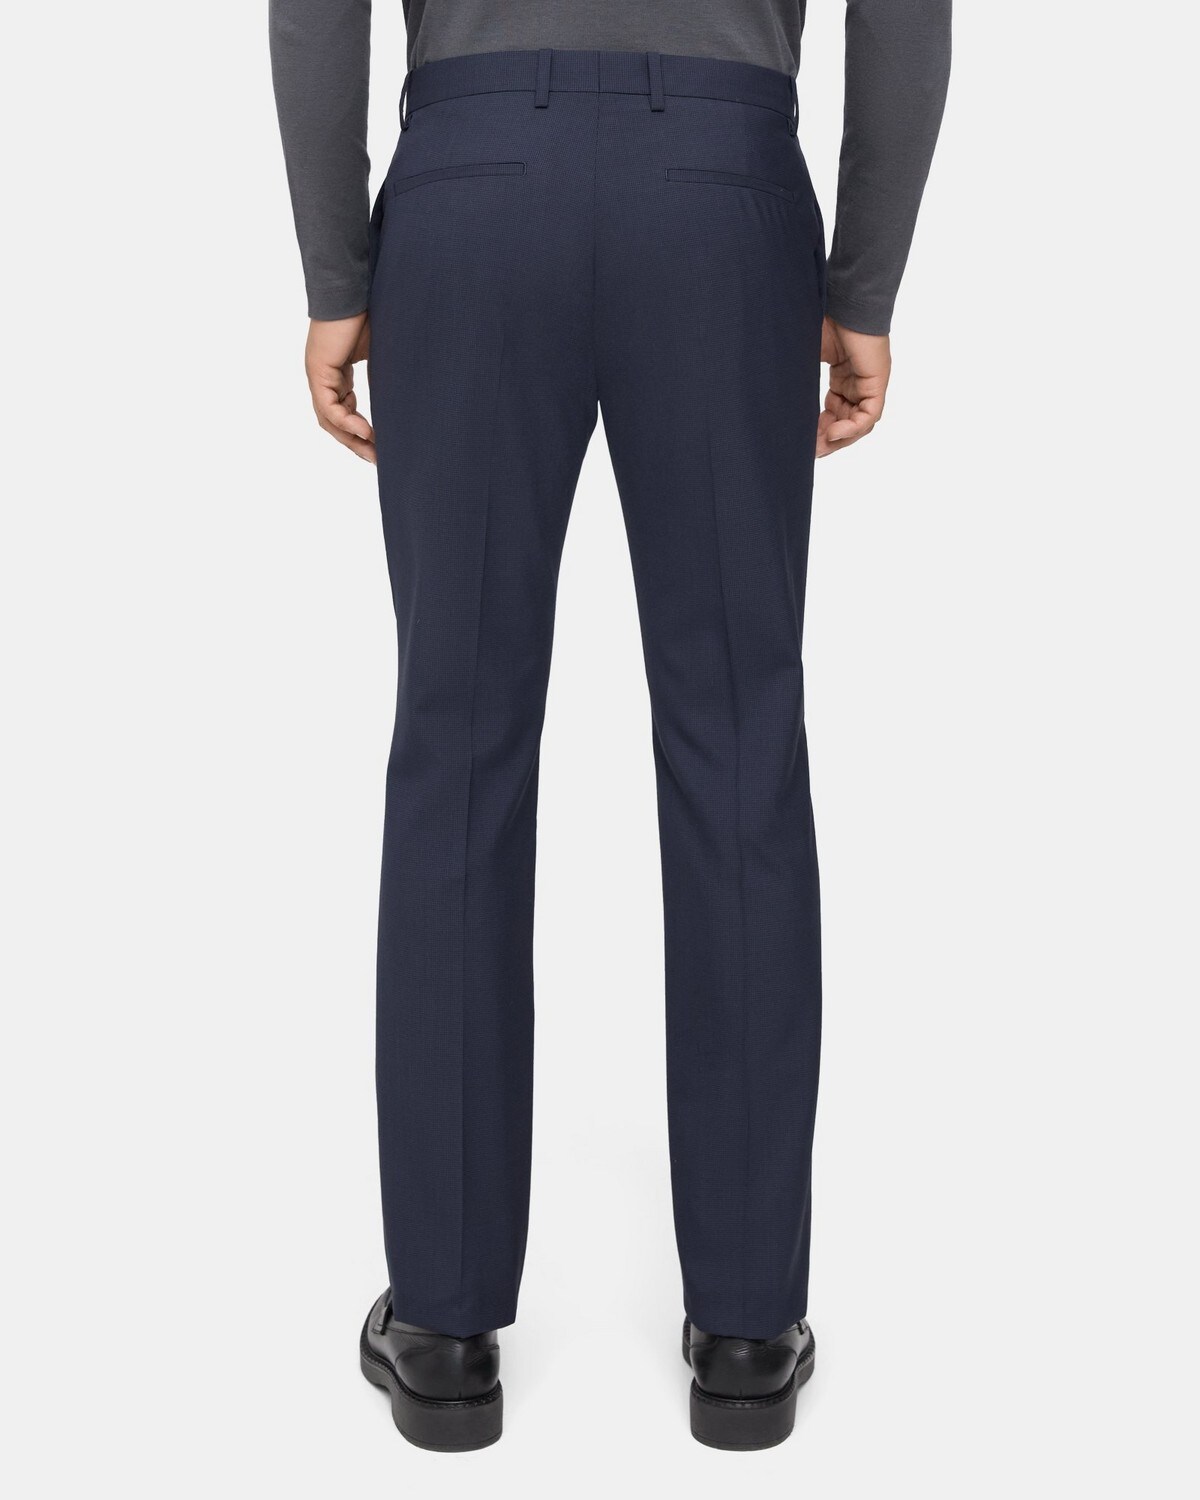 Slim-Fit Suit Pant in Houndstooth Wool Blend